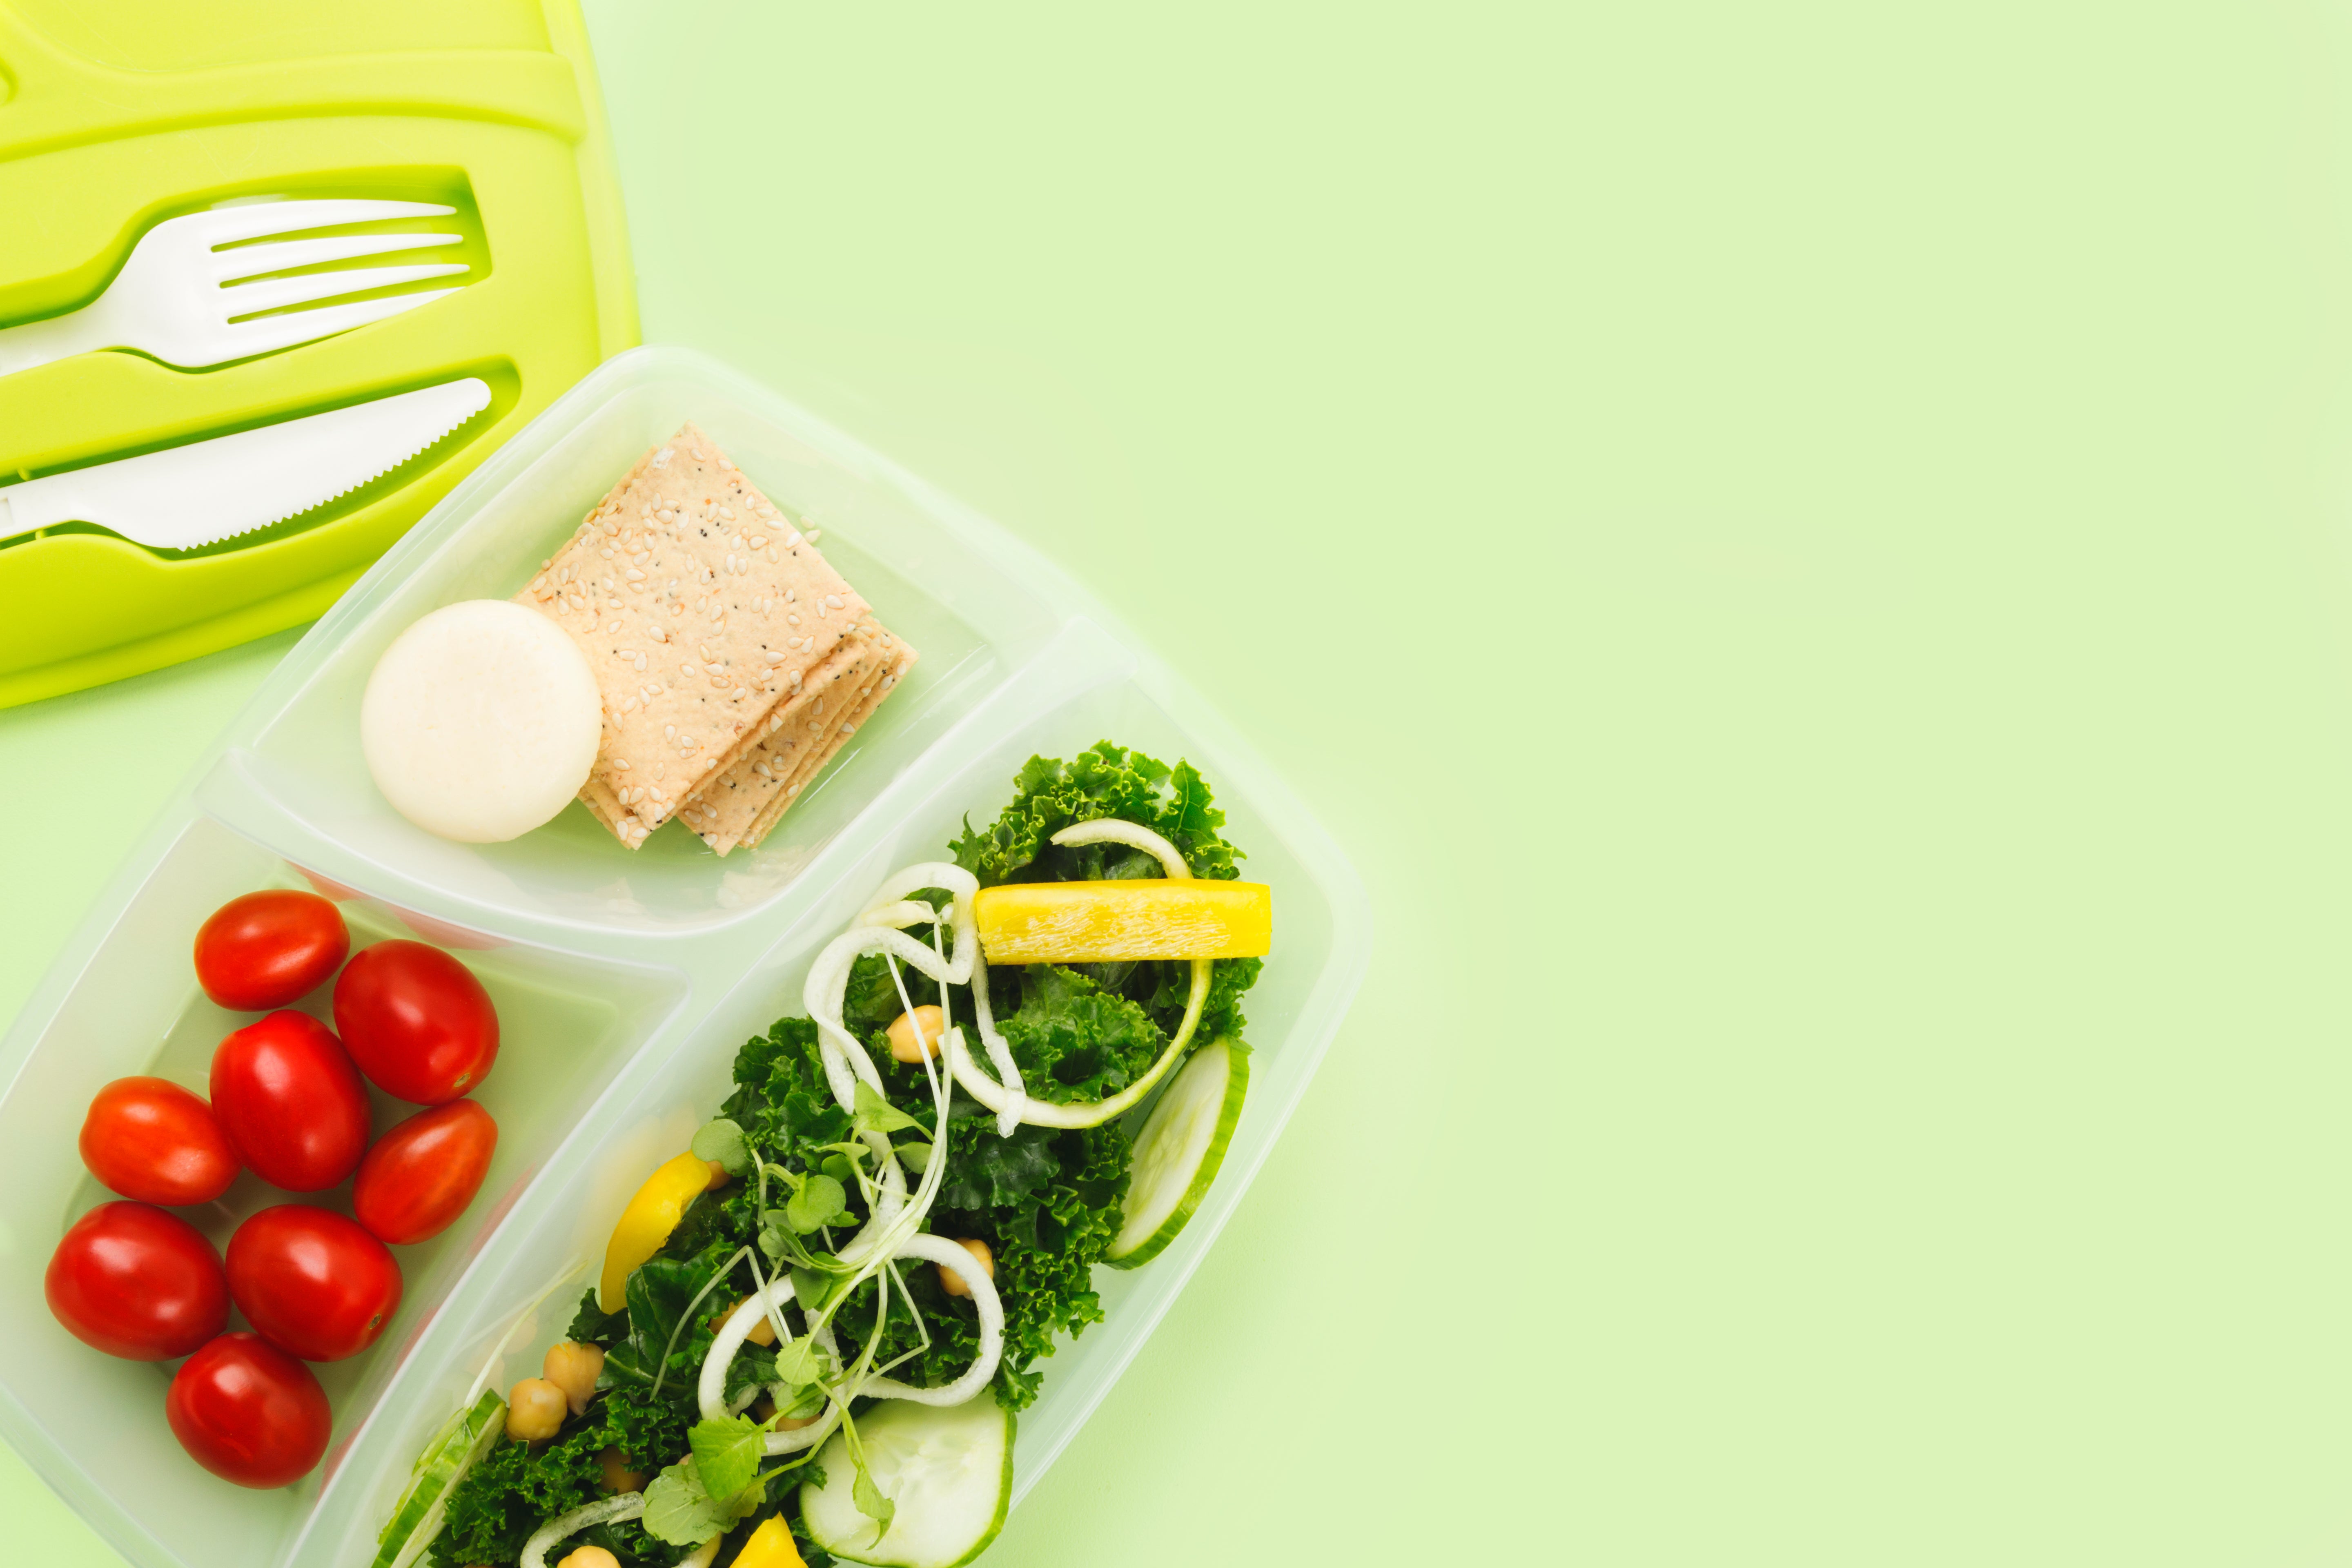 https://burst.shopifycdn.com/photos/a-tupperware-lunch-box-separates-salad-ingredients.jpg?exif=0&iptc=0